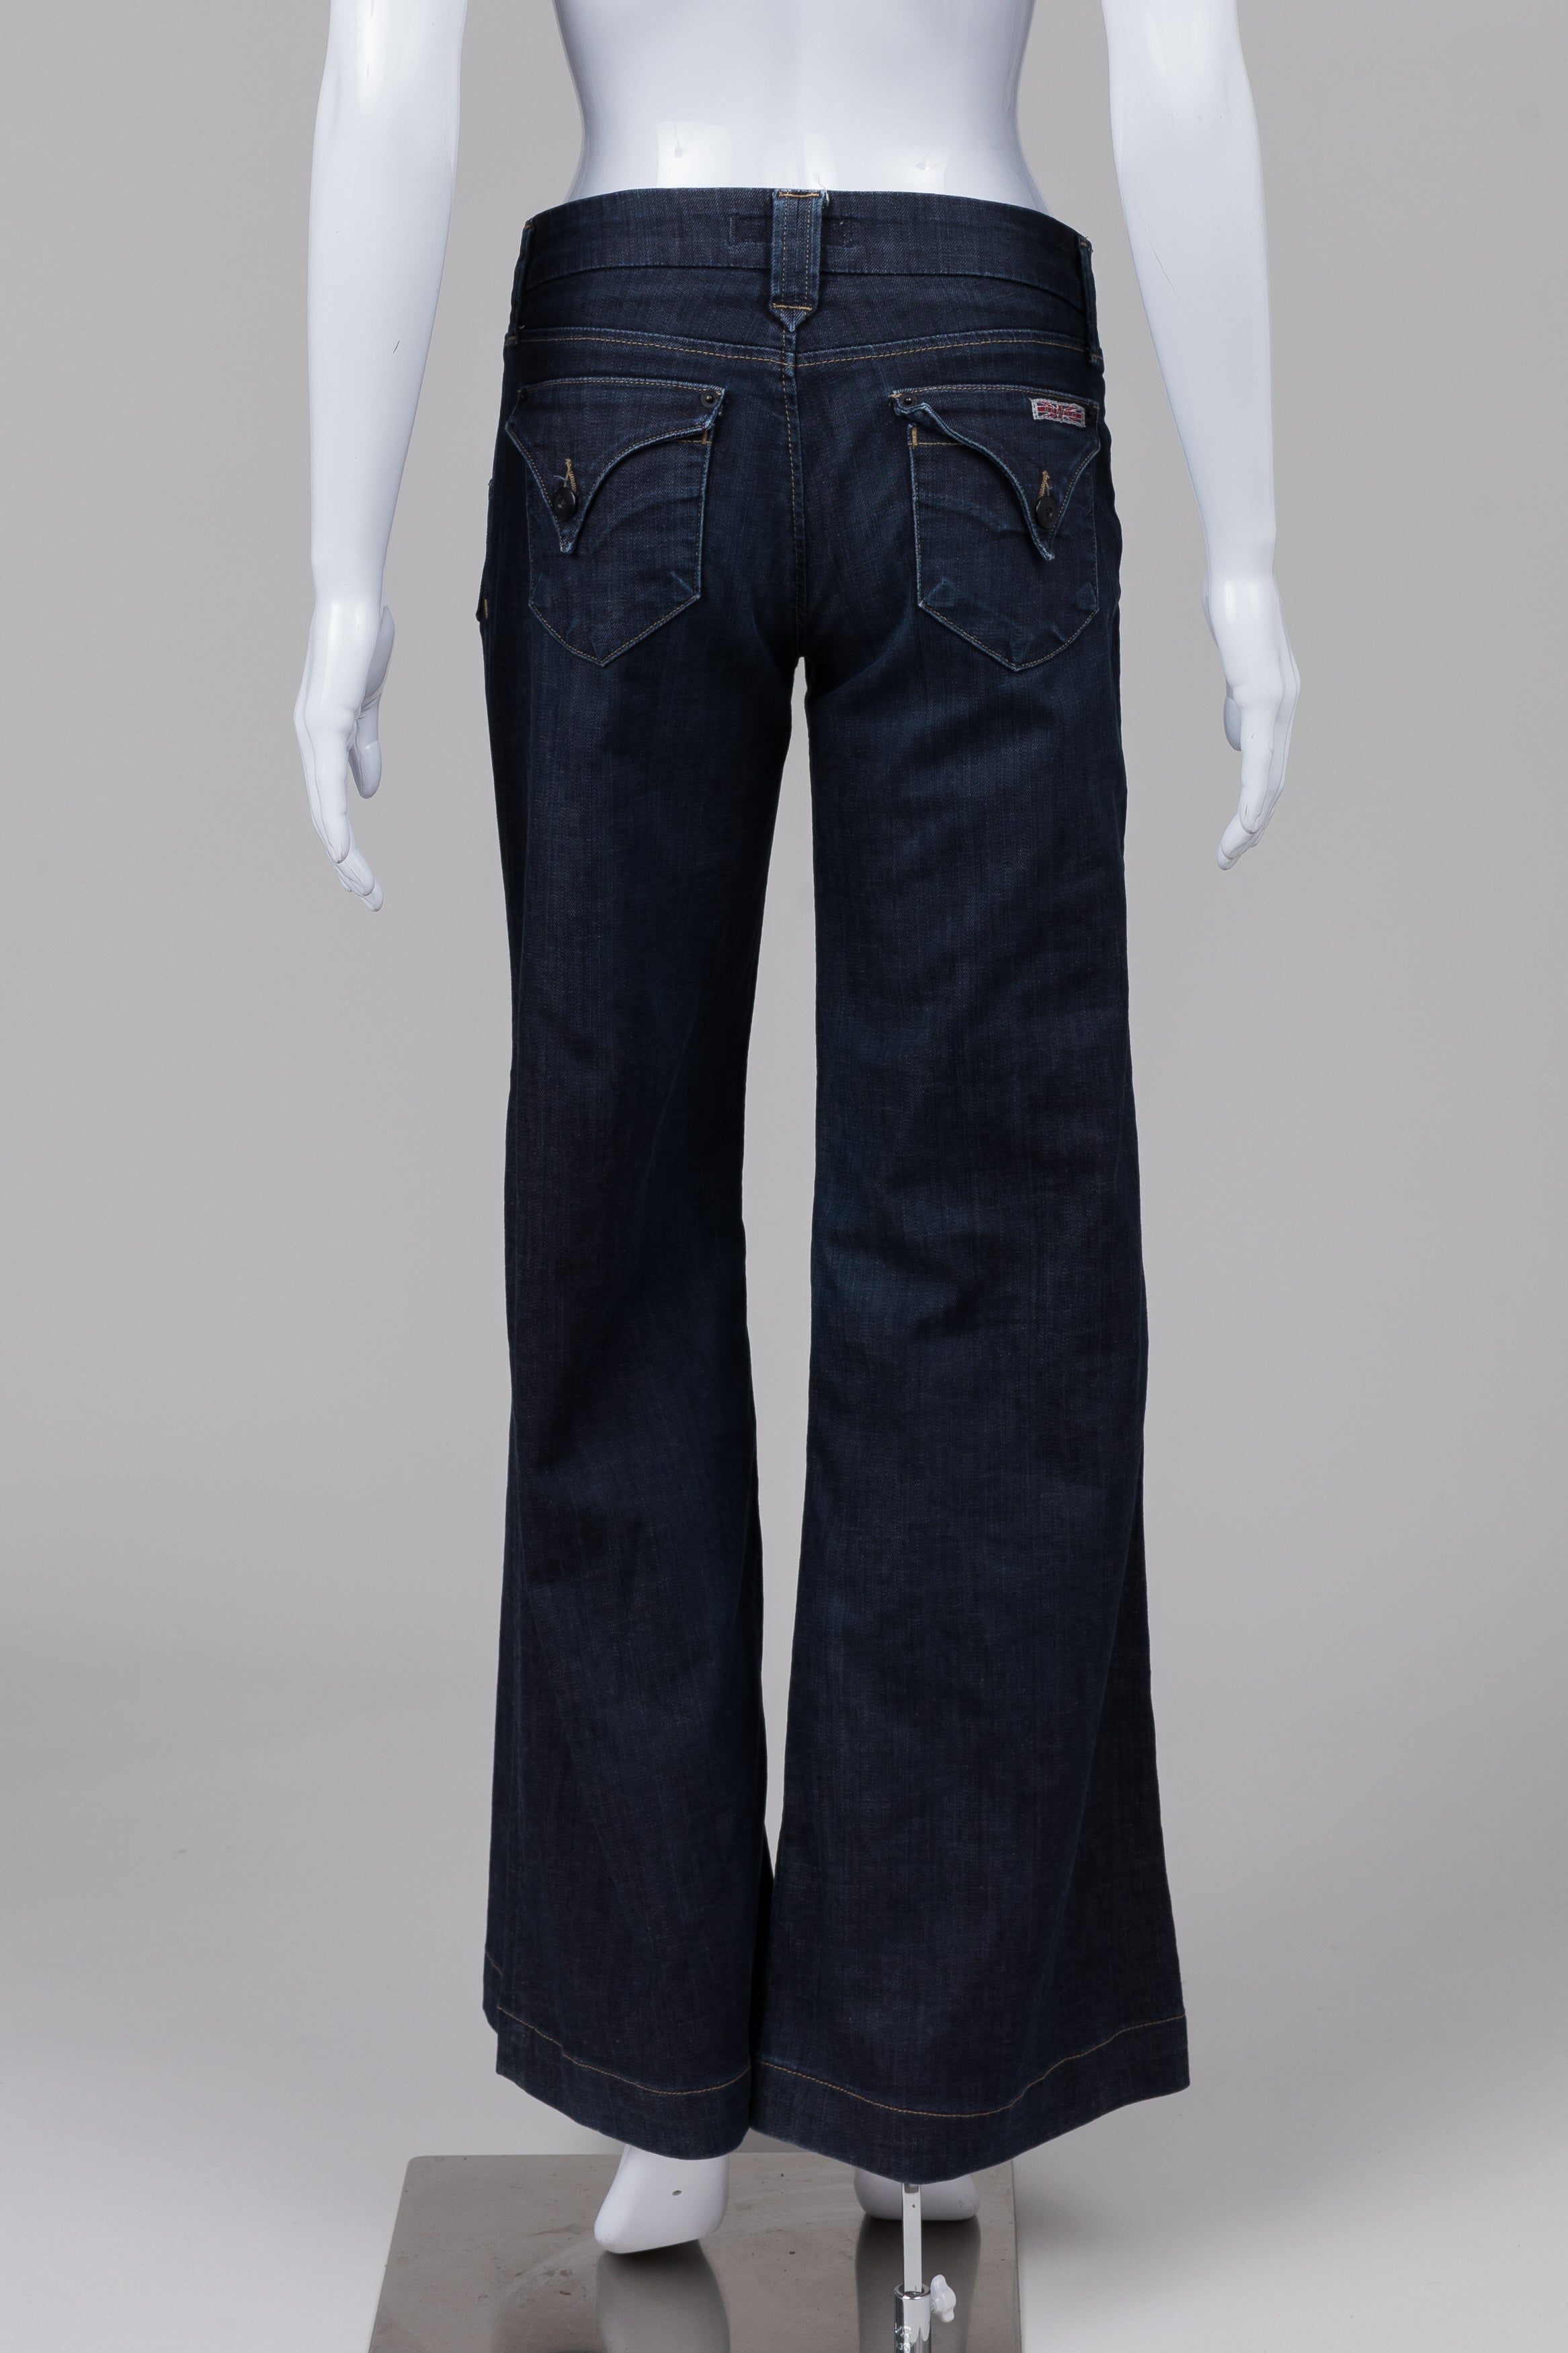 Hudson Flare Jeans (27)